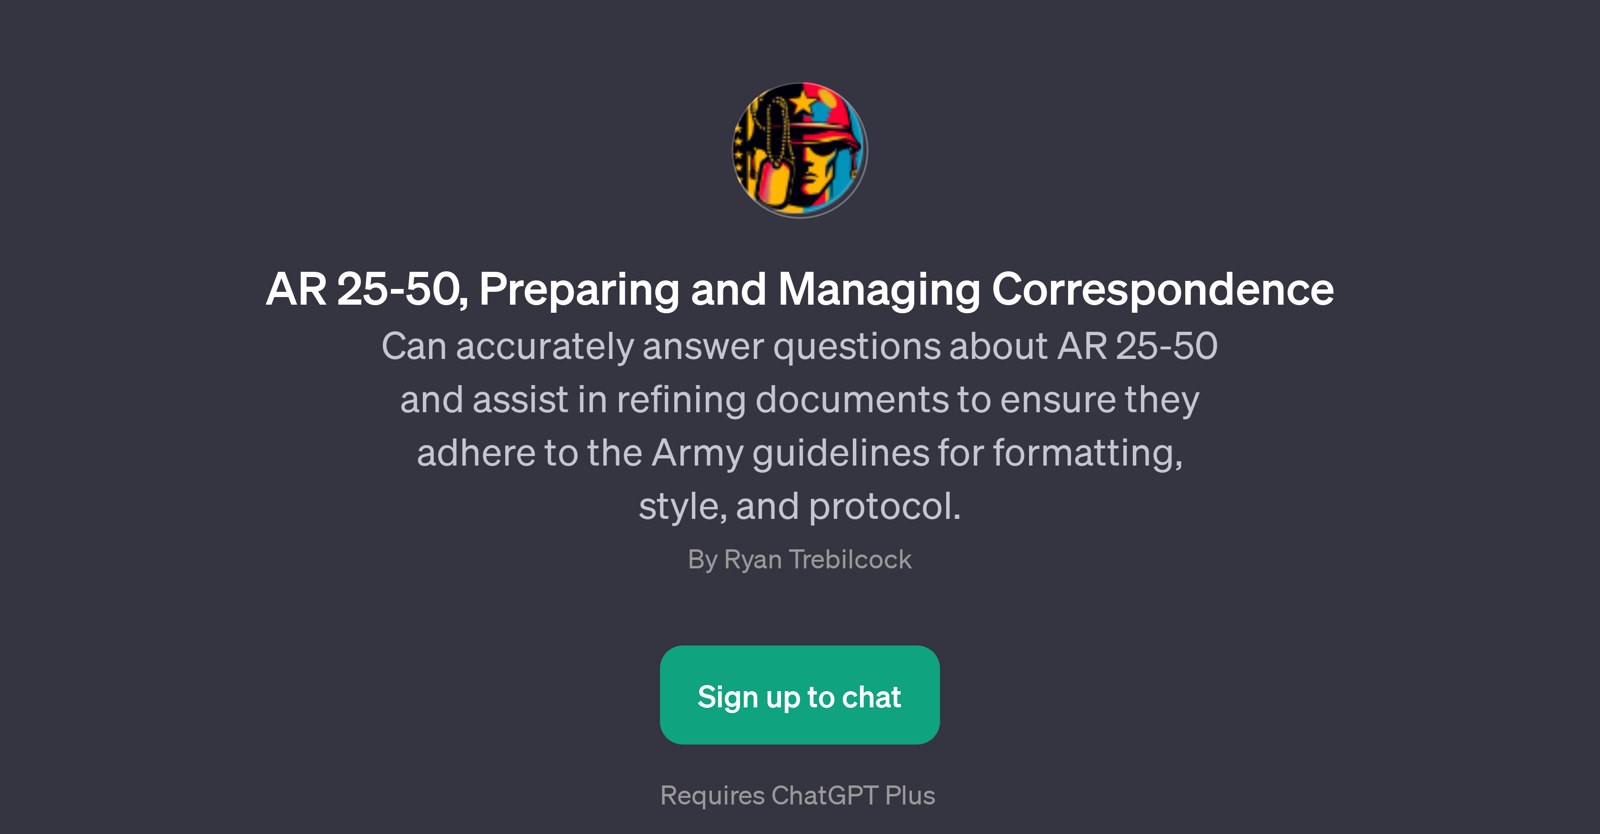 AR 25-50, Preparing and Managing Correspondence website